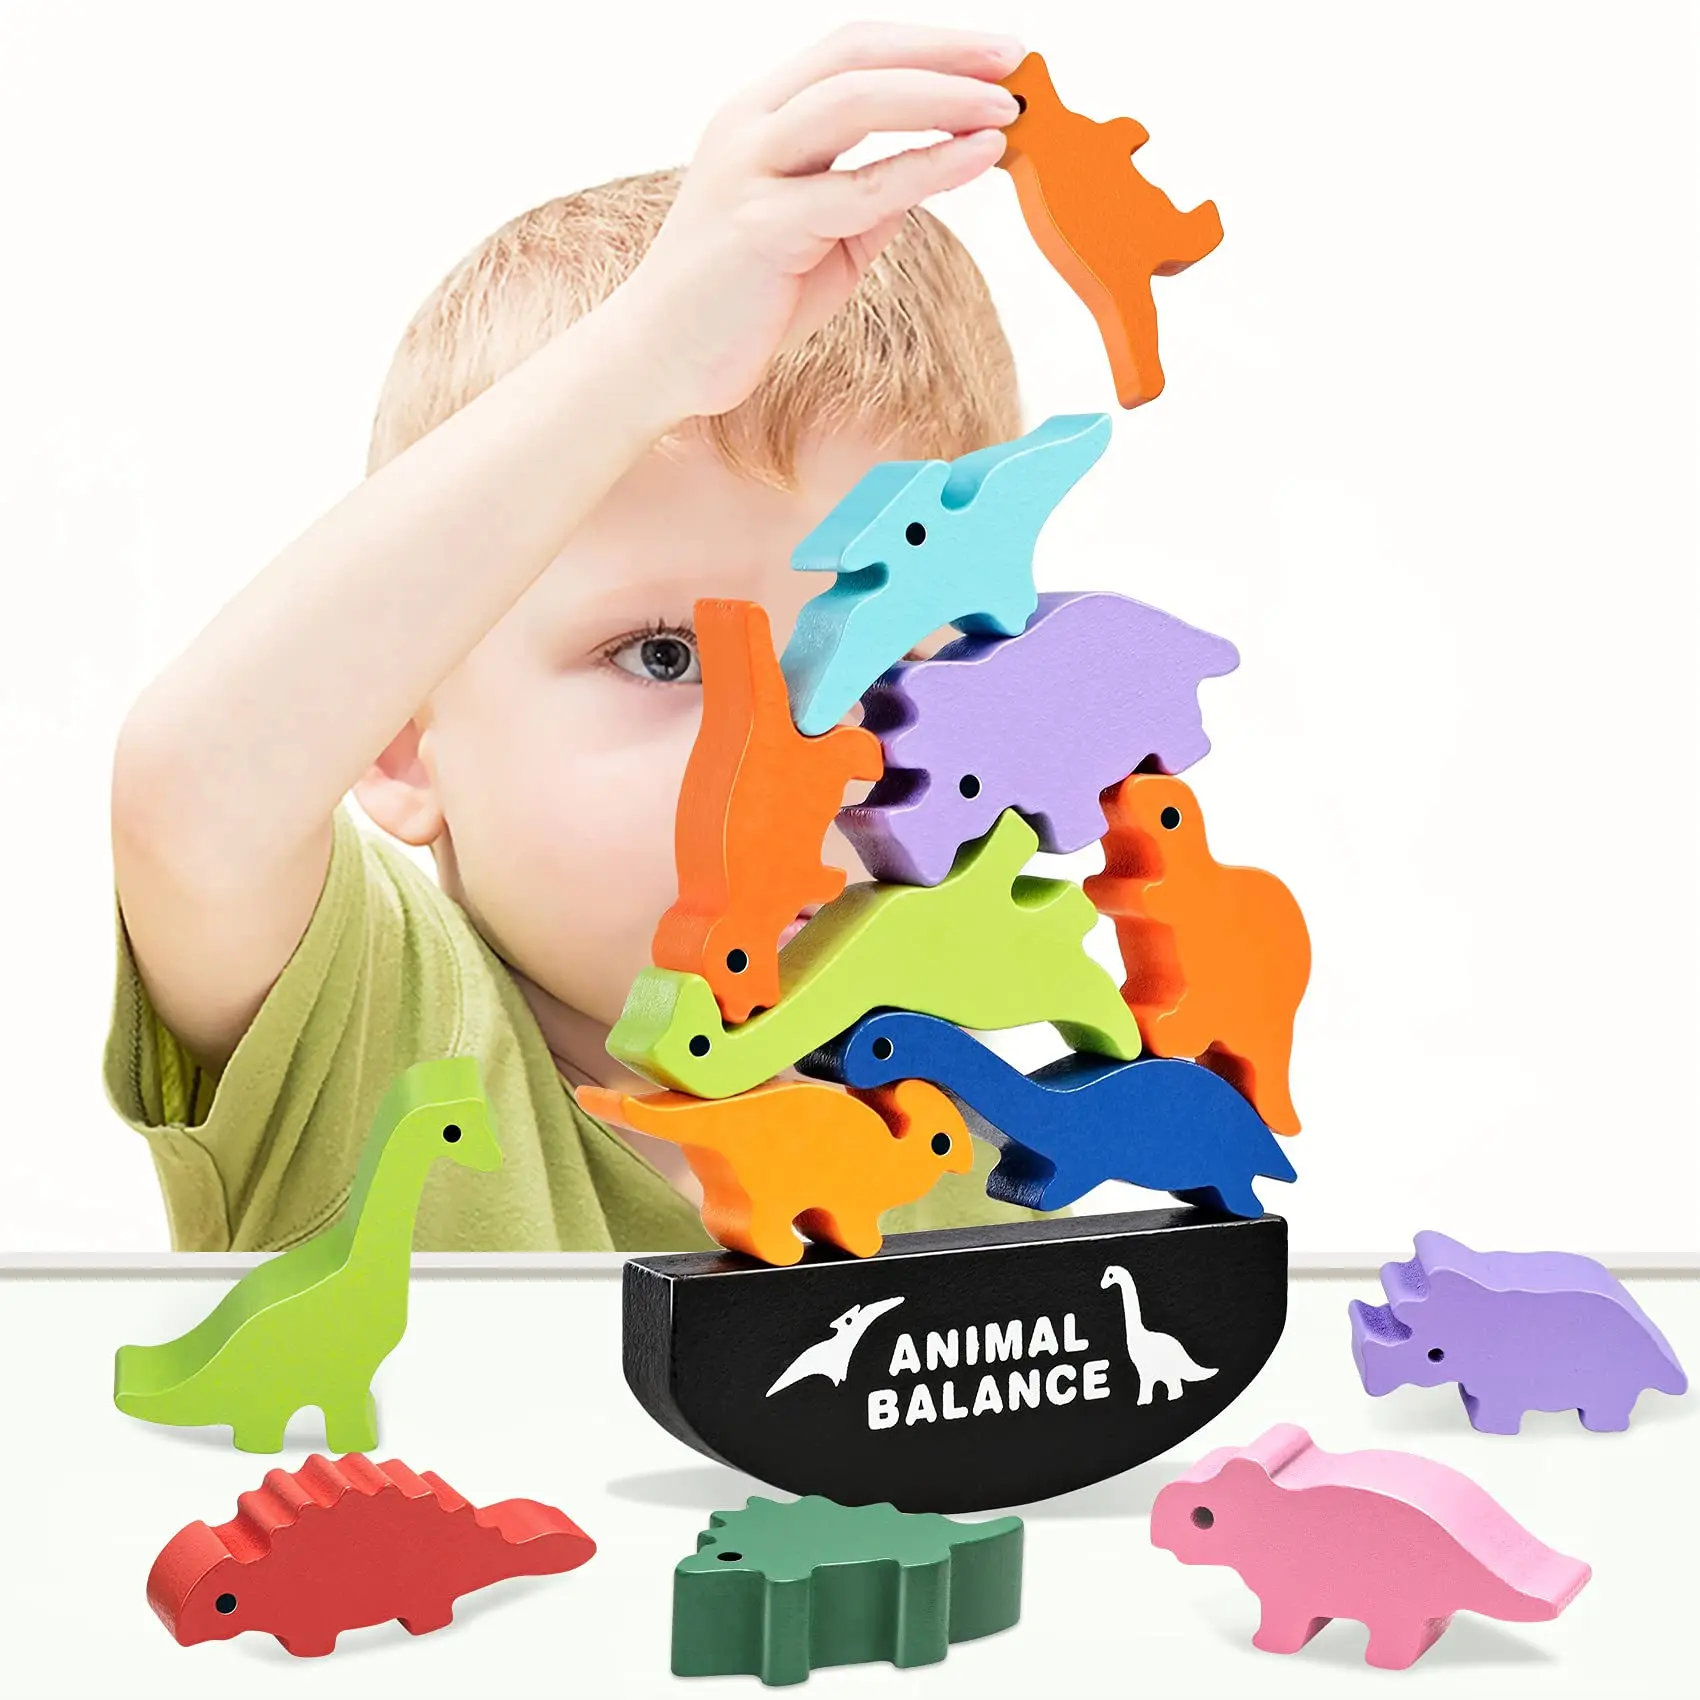 Animal balance. Балансирующие животные. Balancing Blocks animal. Dinosaur pile-up.